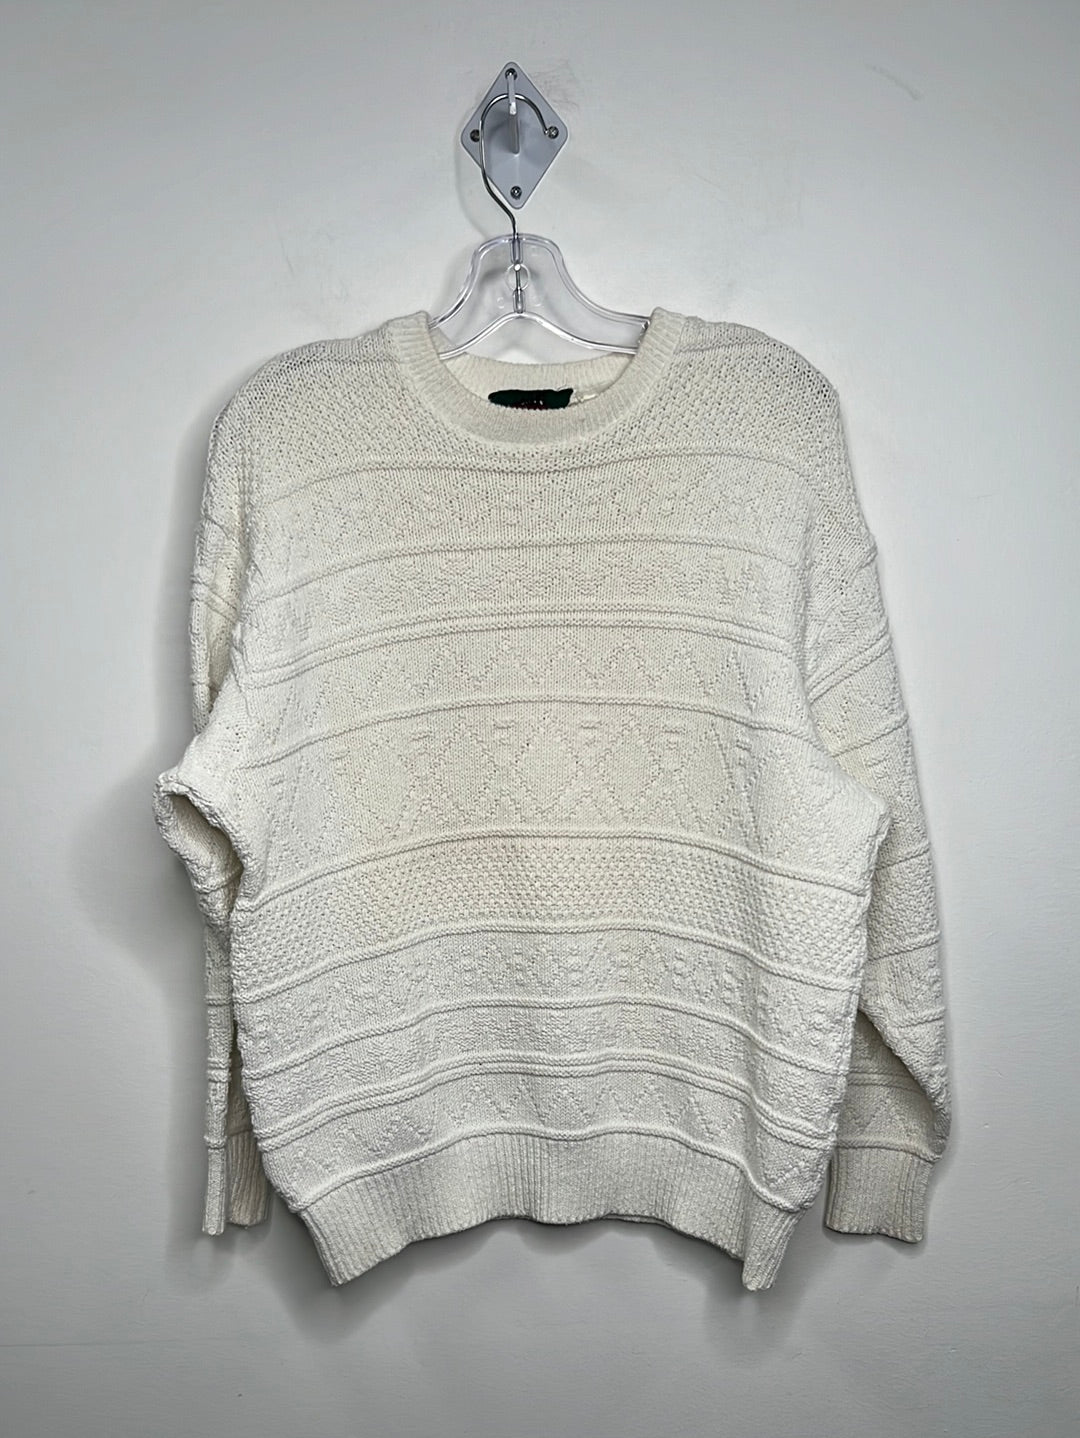 Vintage Parkhurst Knitted sweater (M)